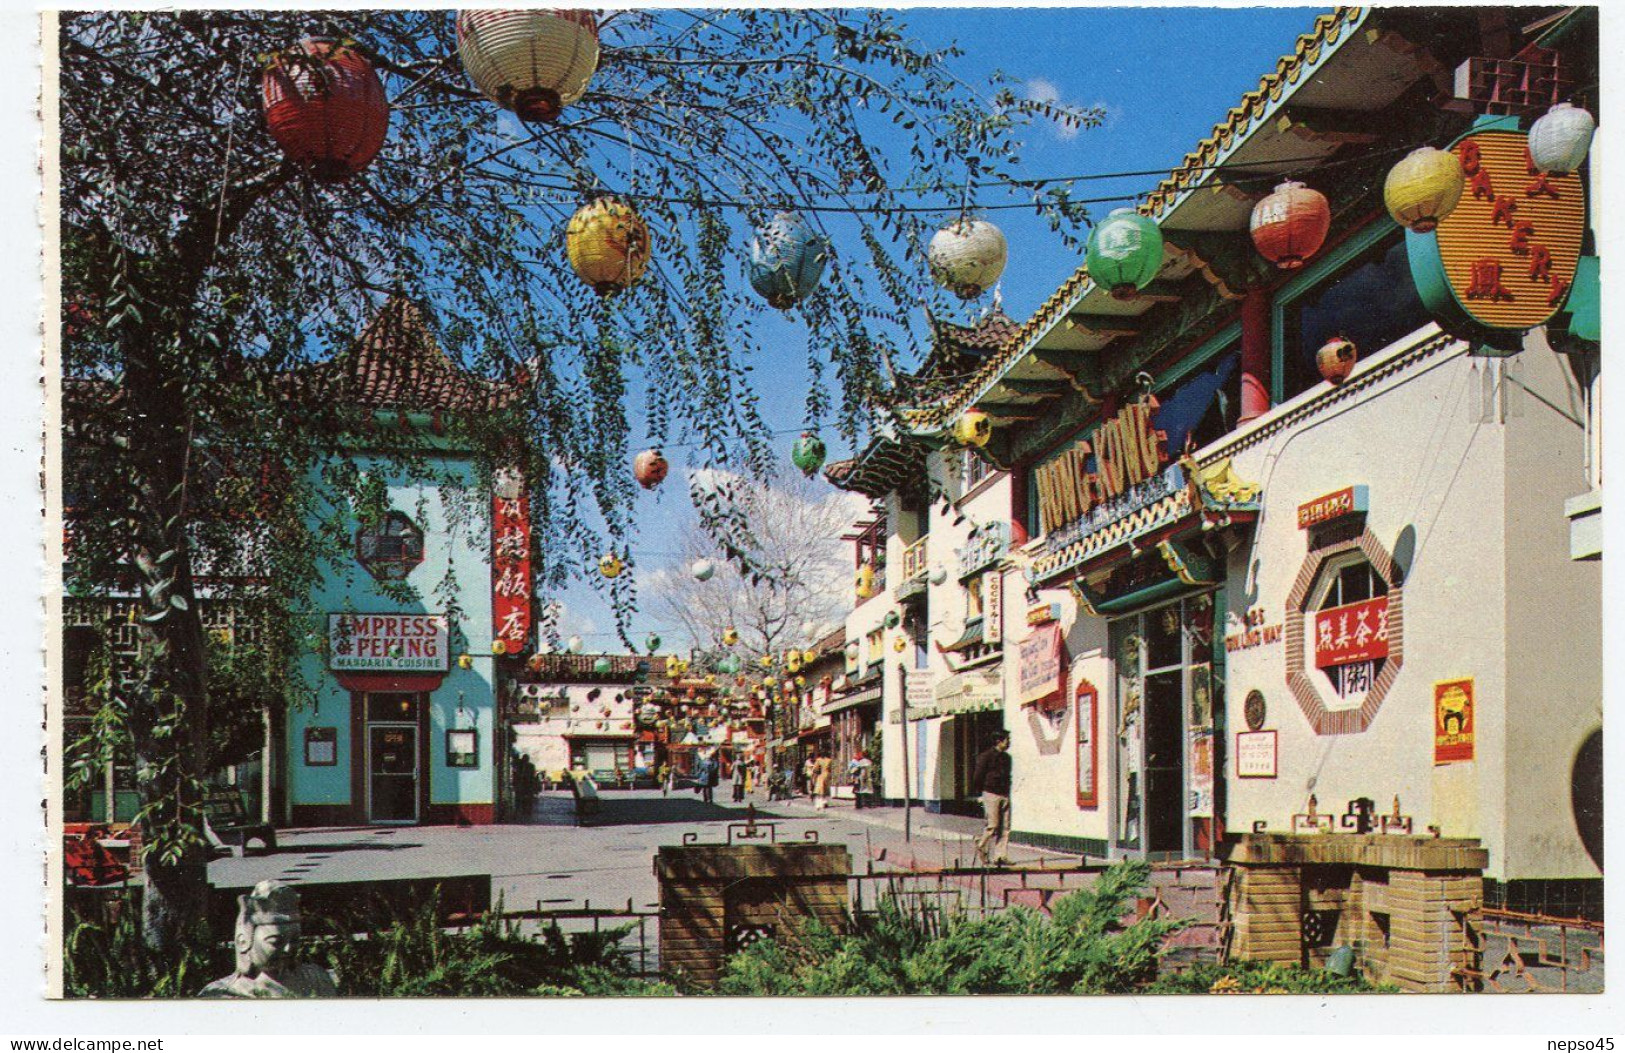 Etats-Unis.Californie Los Angeles Chinatown.Chinese Cuisine.Oriental Goods.Ornate Balconies.Pagoda Towers.Oriental. - Los Angeles